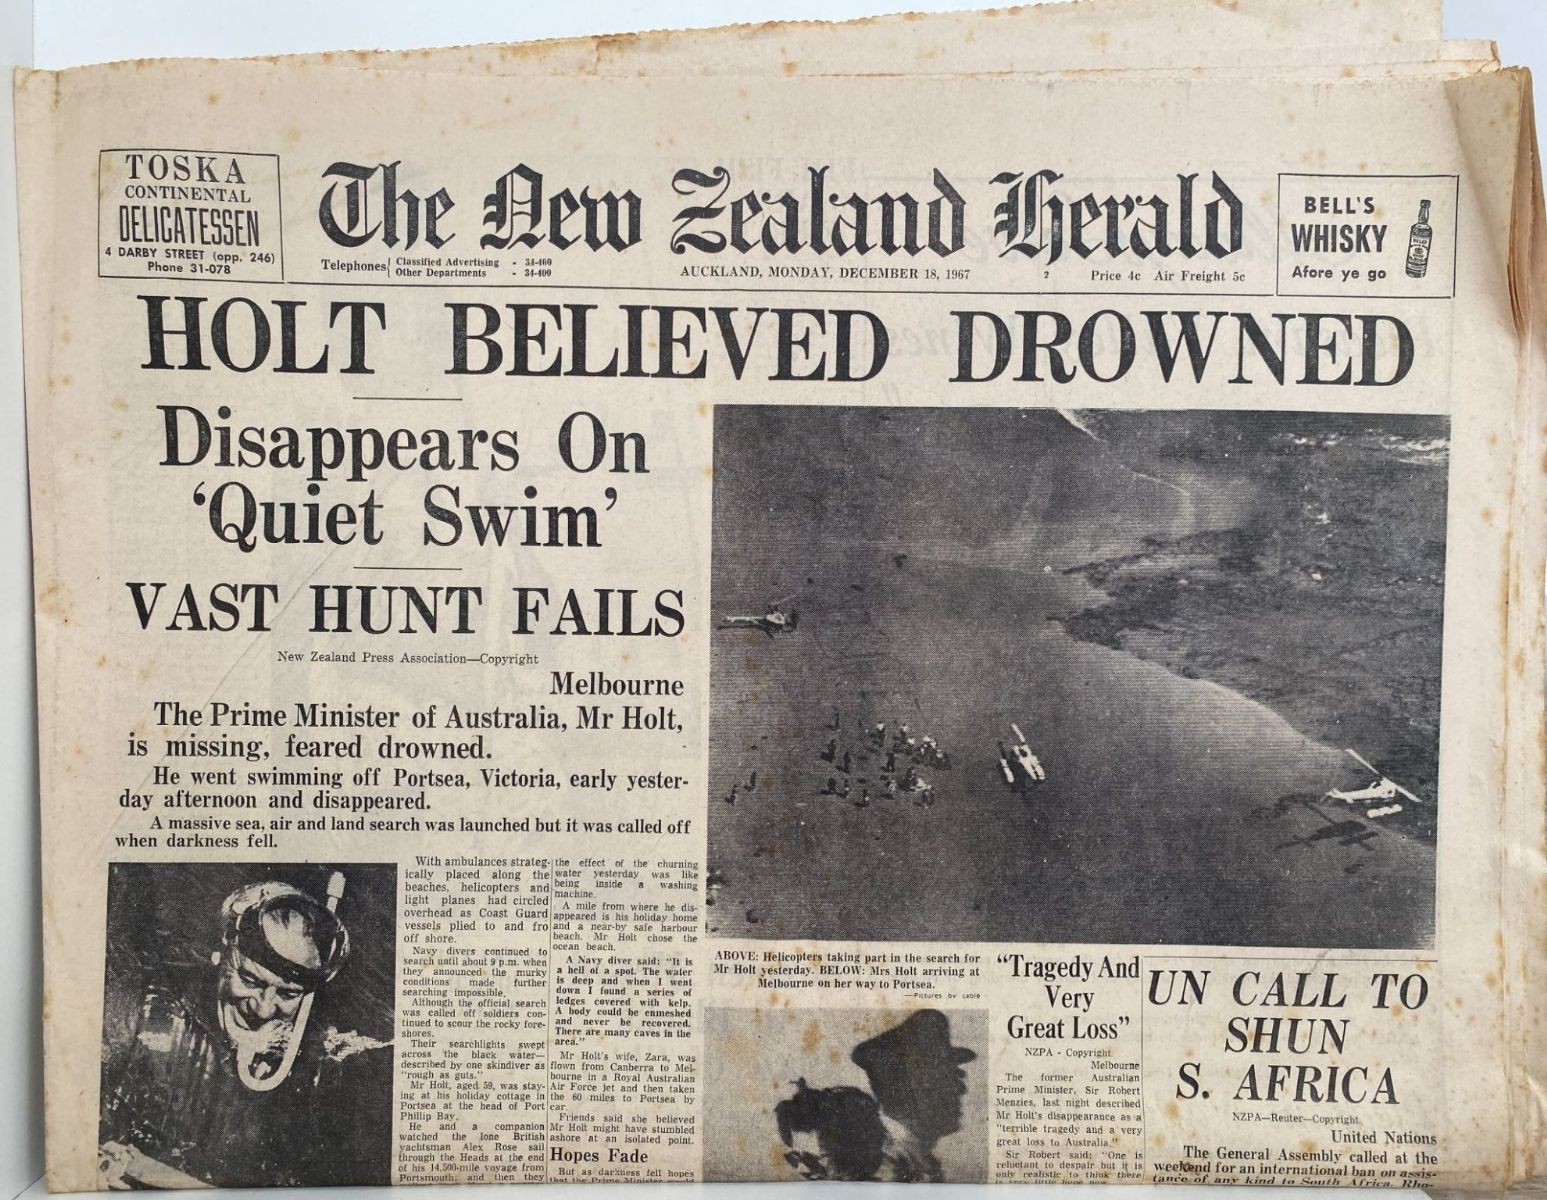 OLD NEWSPAPER: The New Zealand Herald, 18th December 1967 - Australian PM death